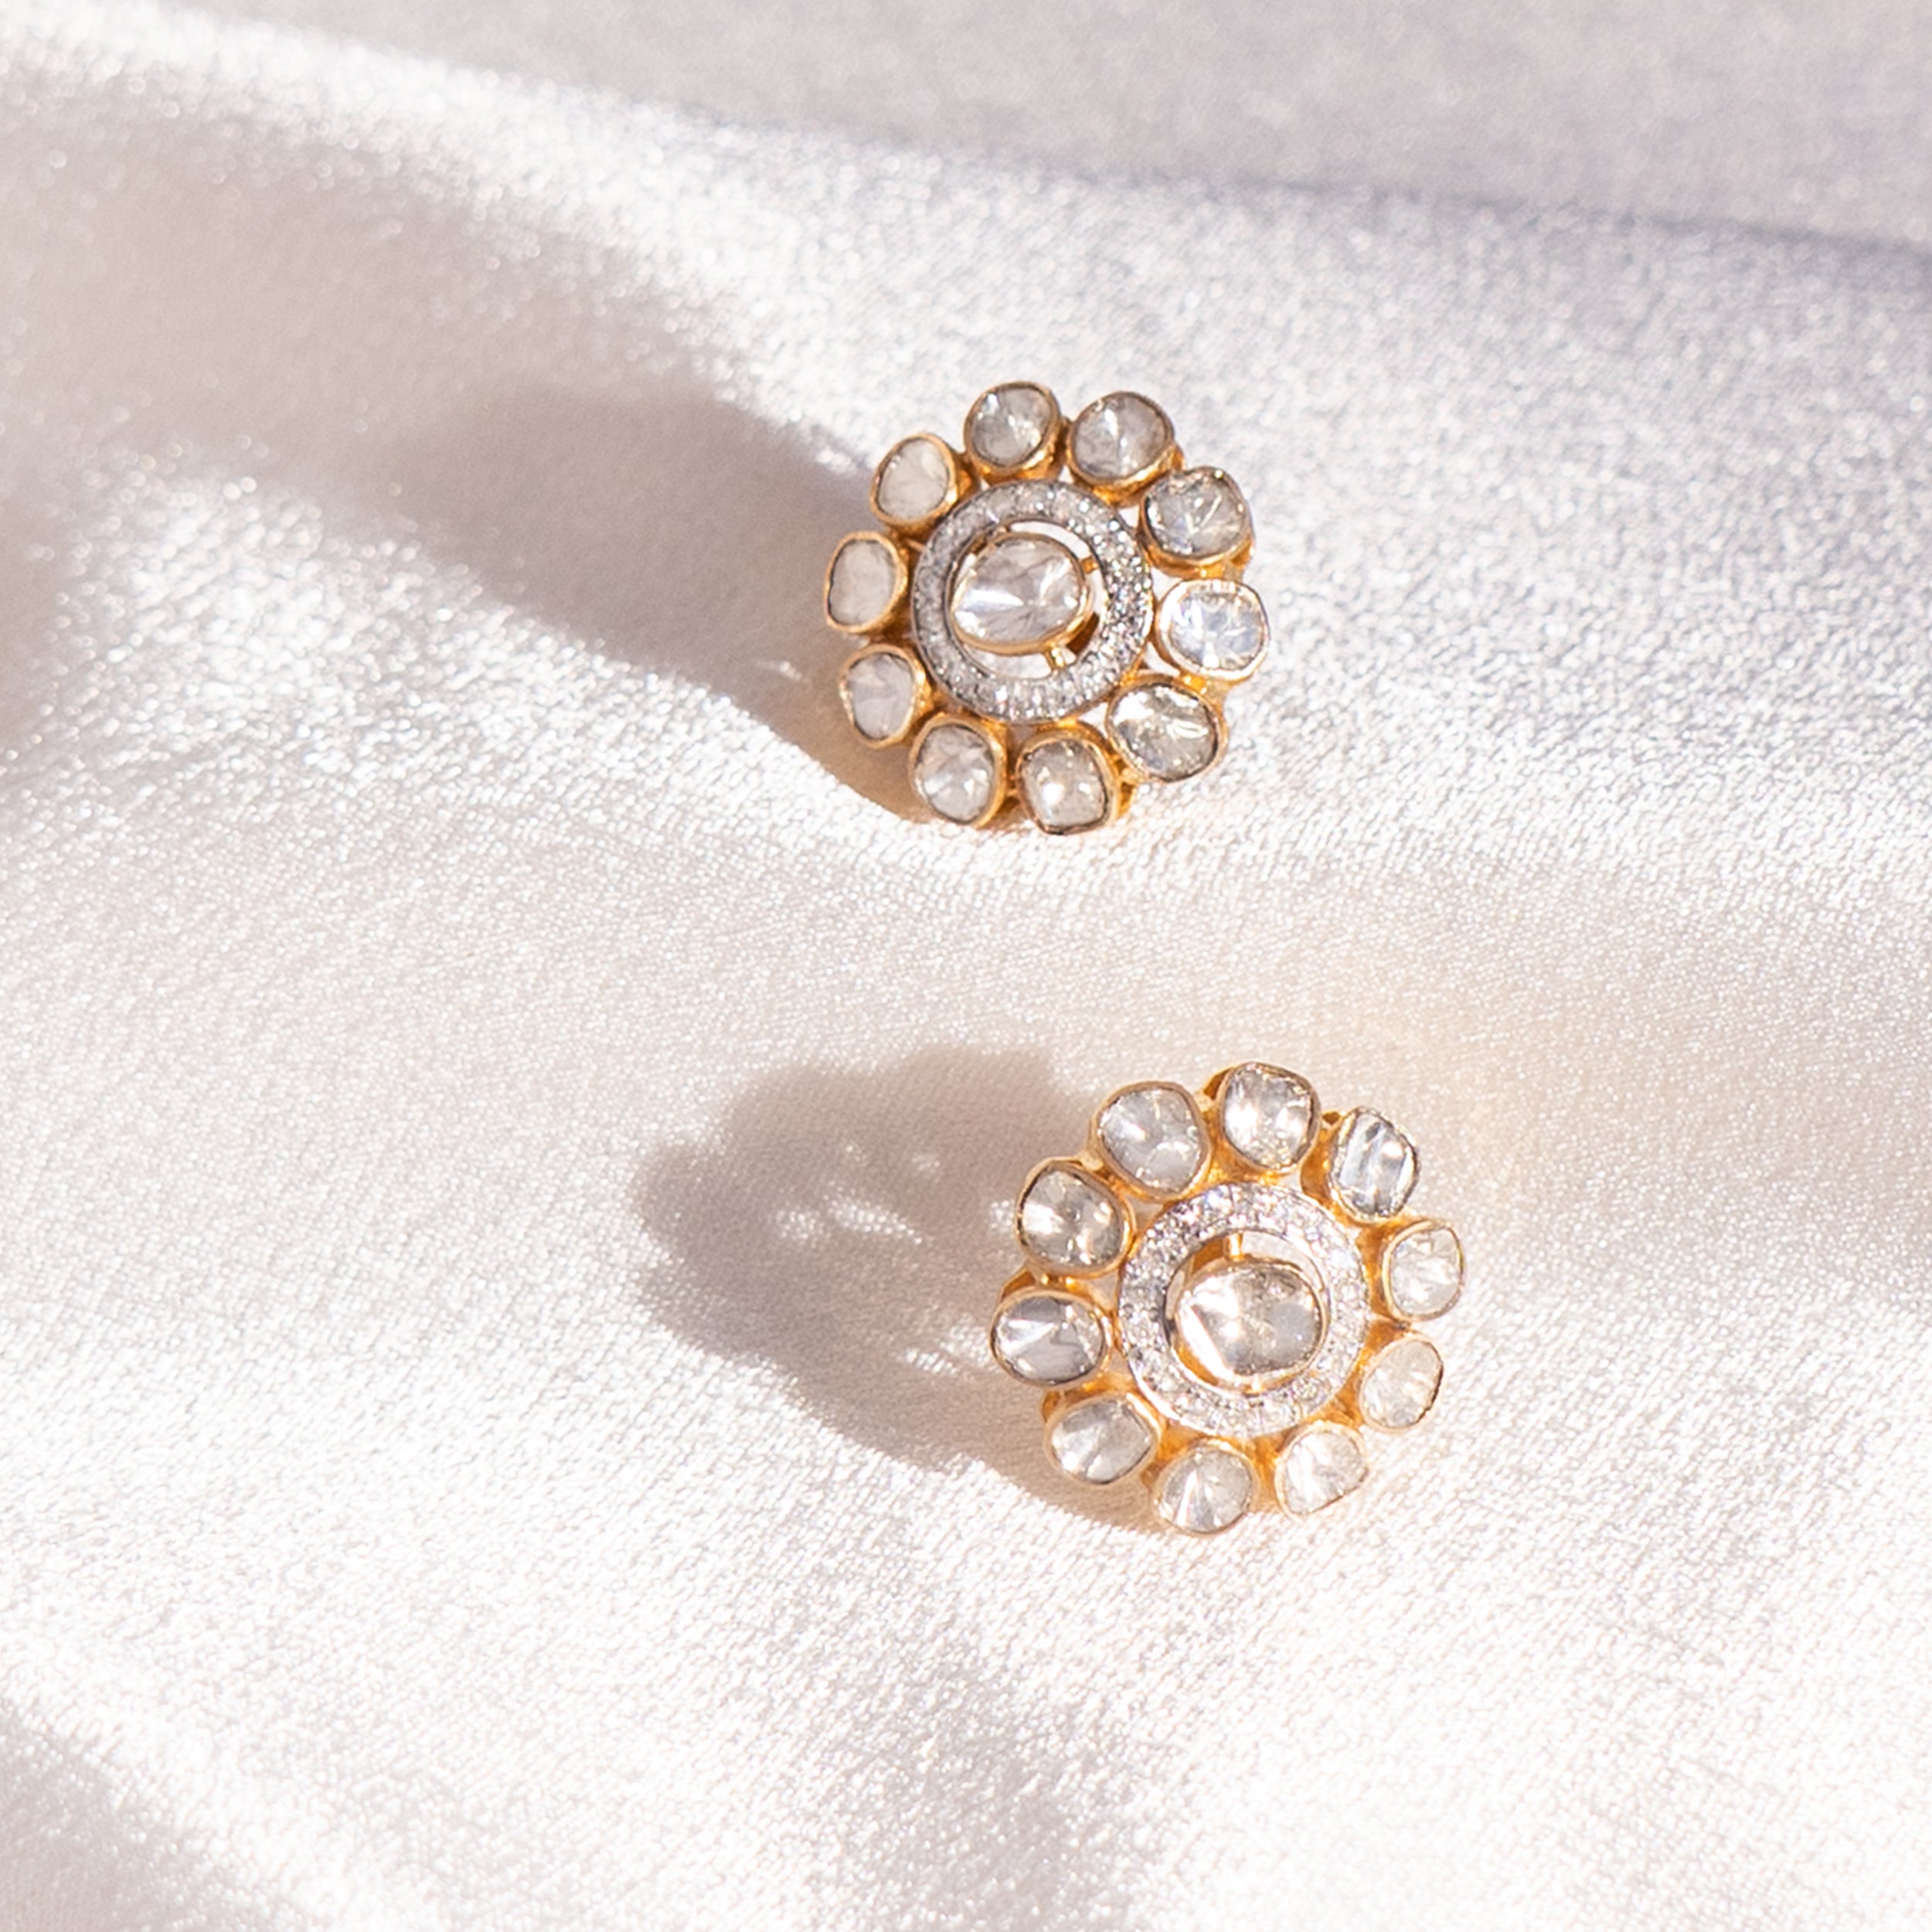 Stunning floral motif earrings made of sparkling polki diamonds.